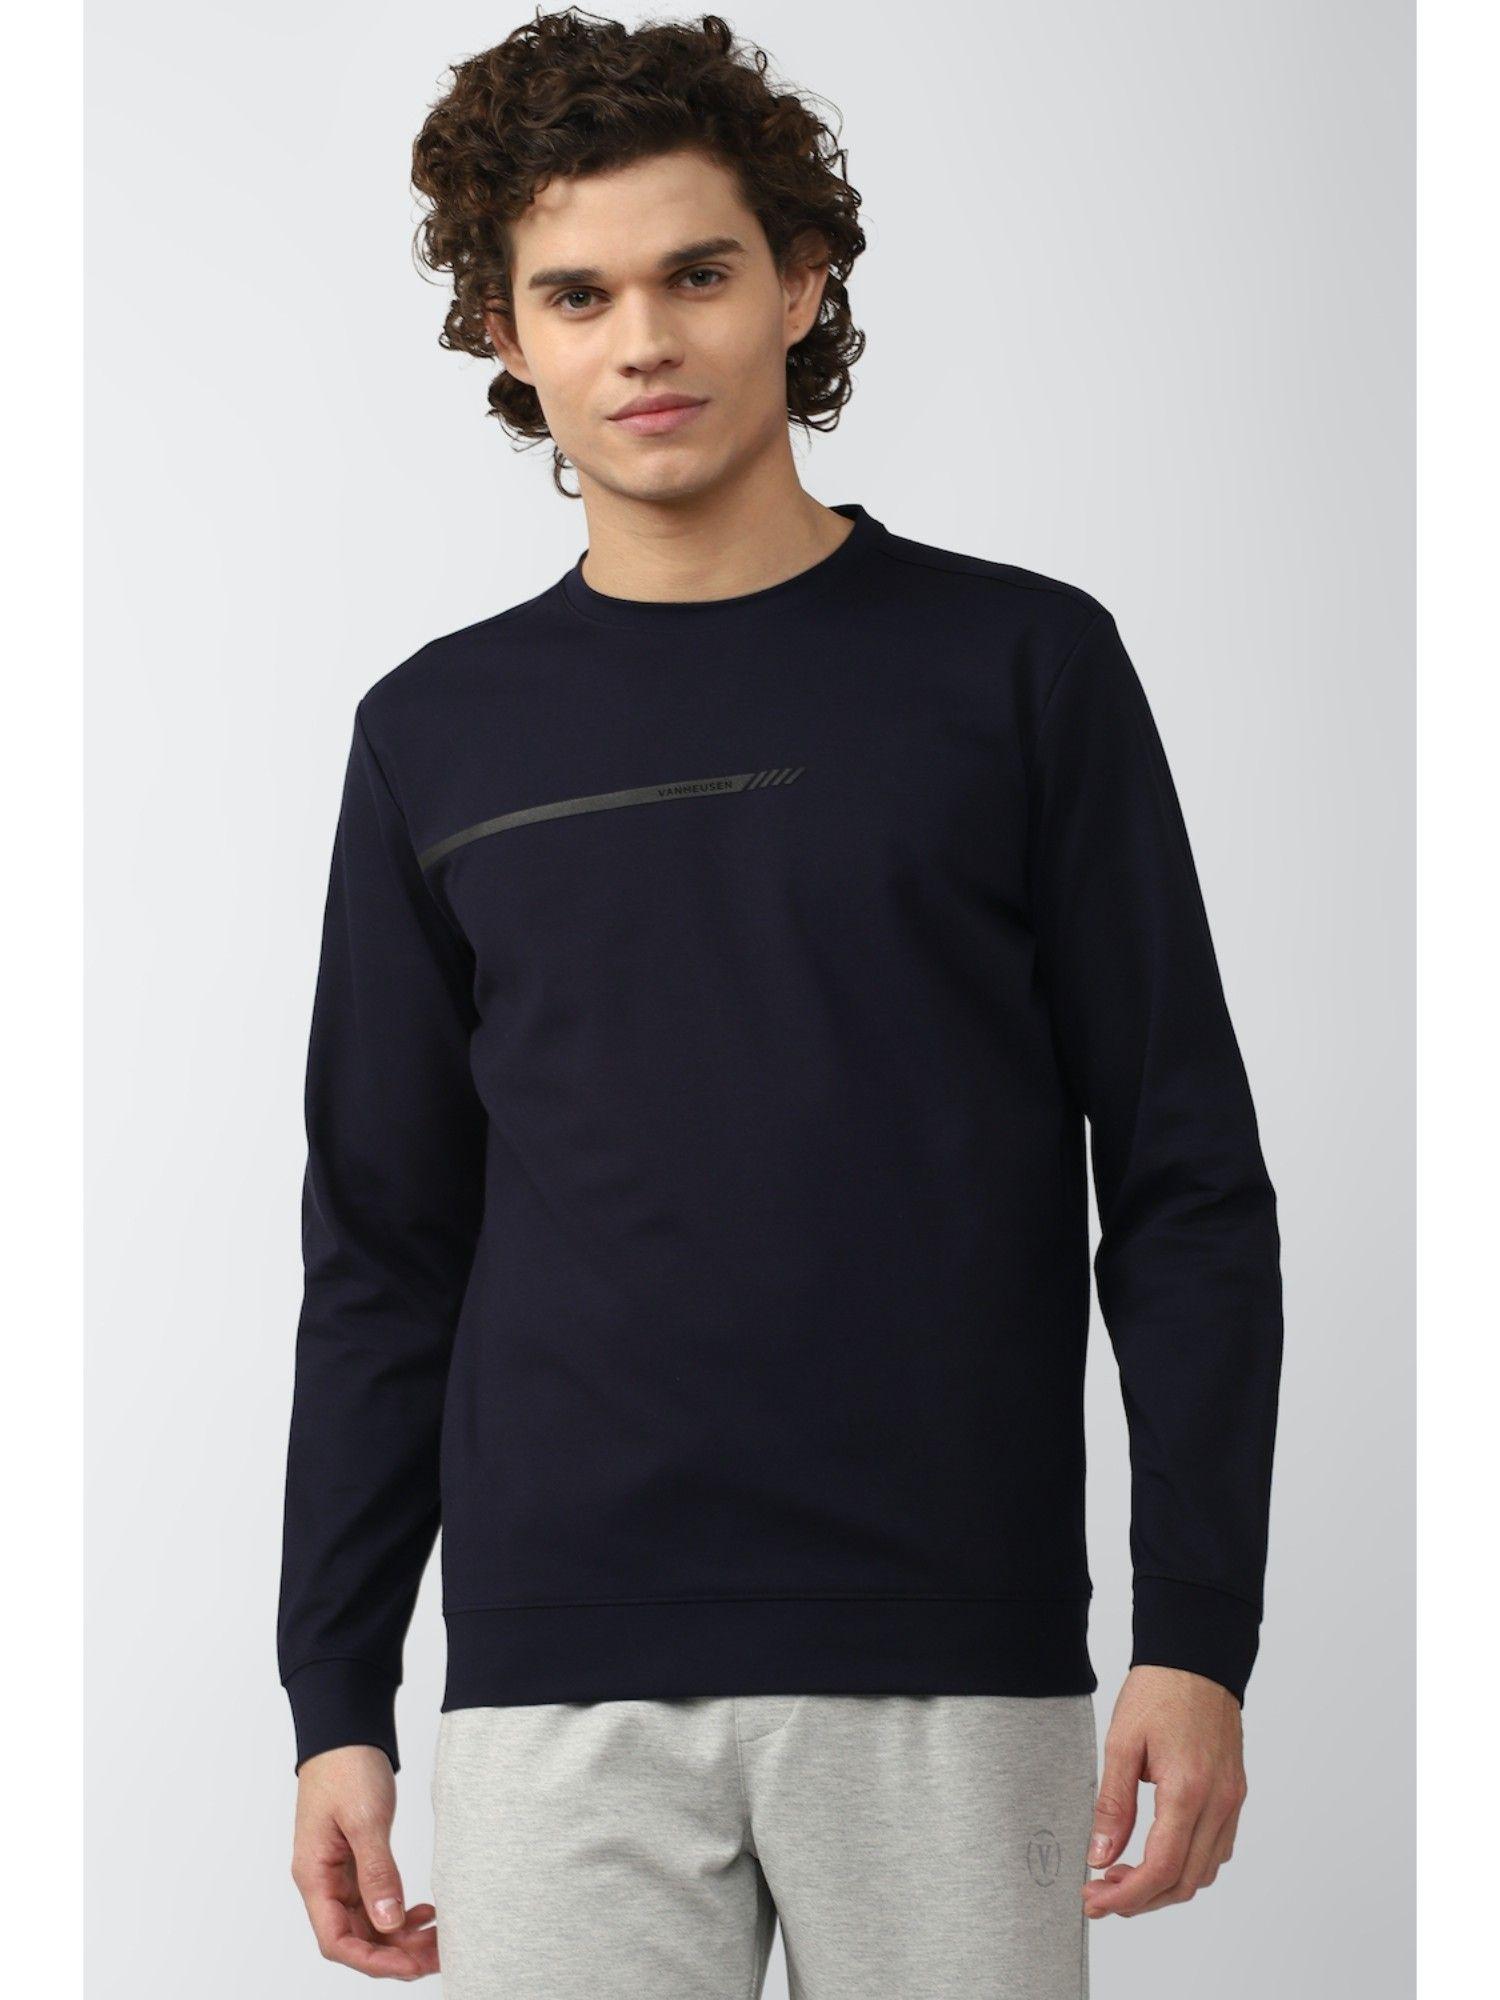 navy blue solid sweatshirt